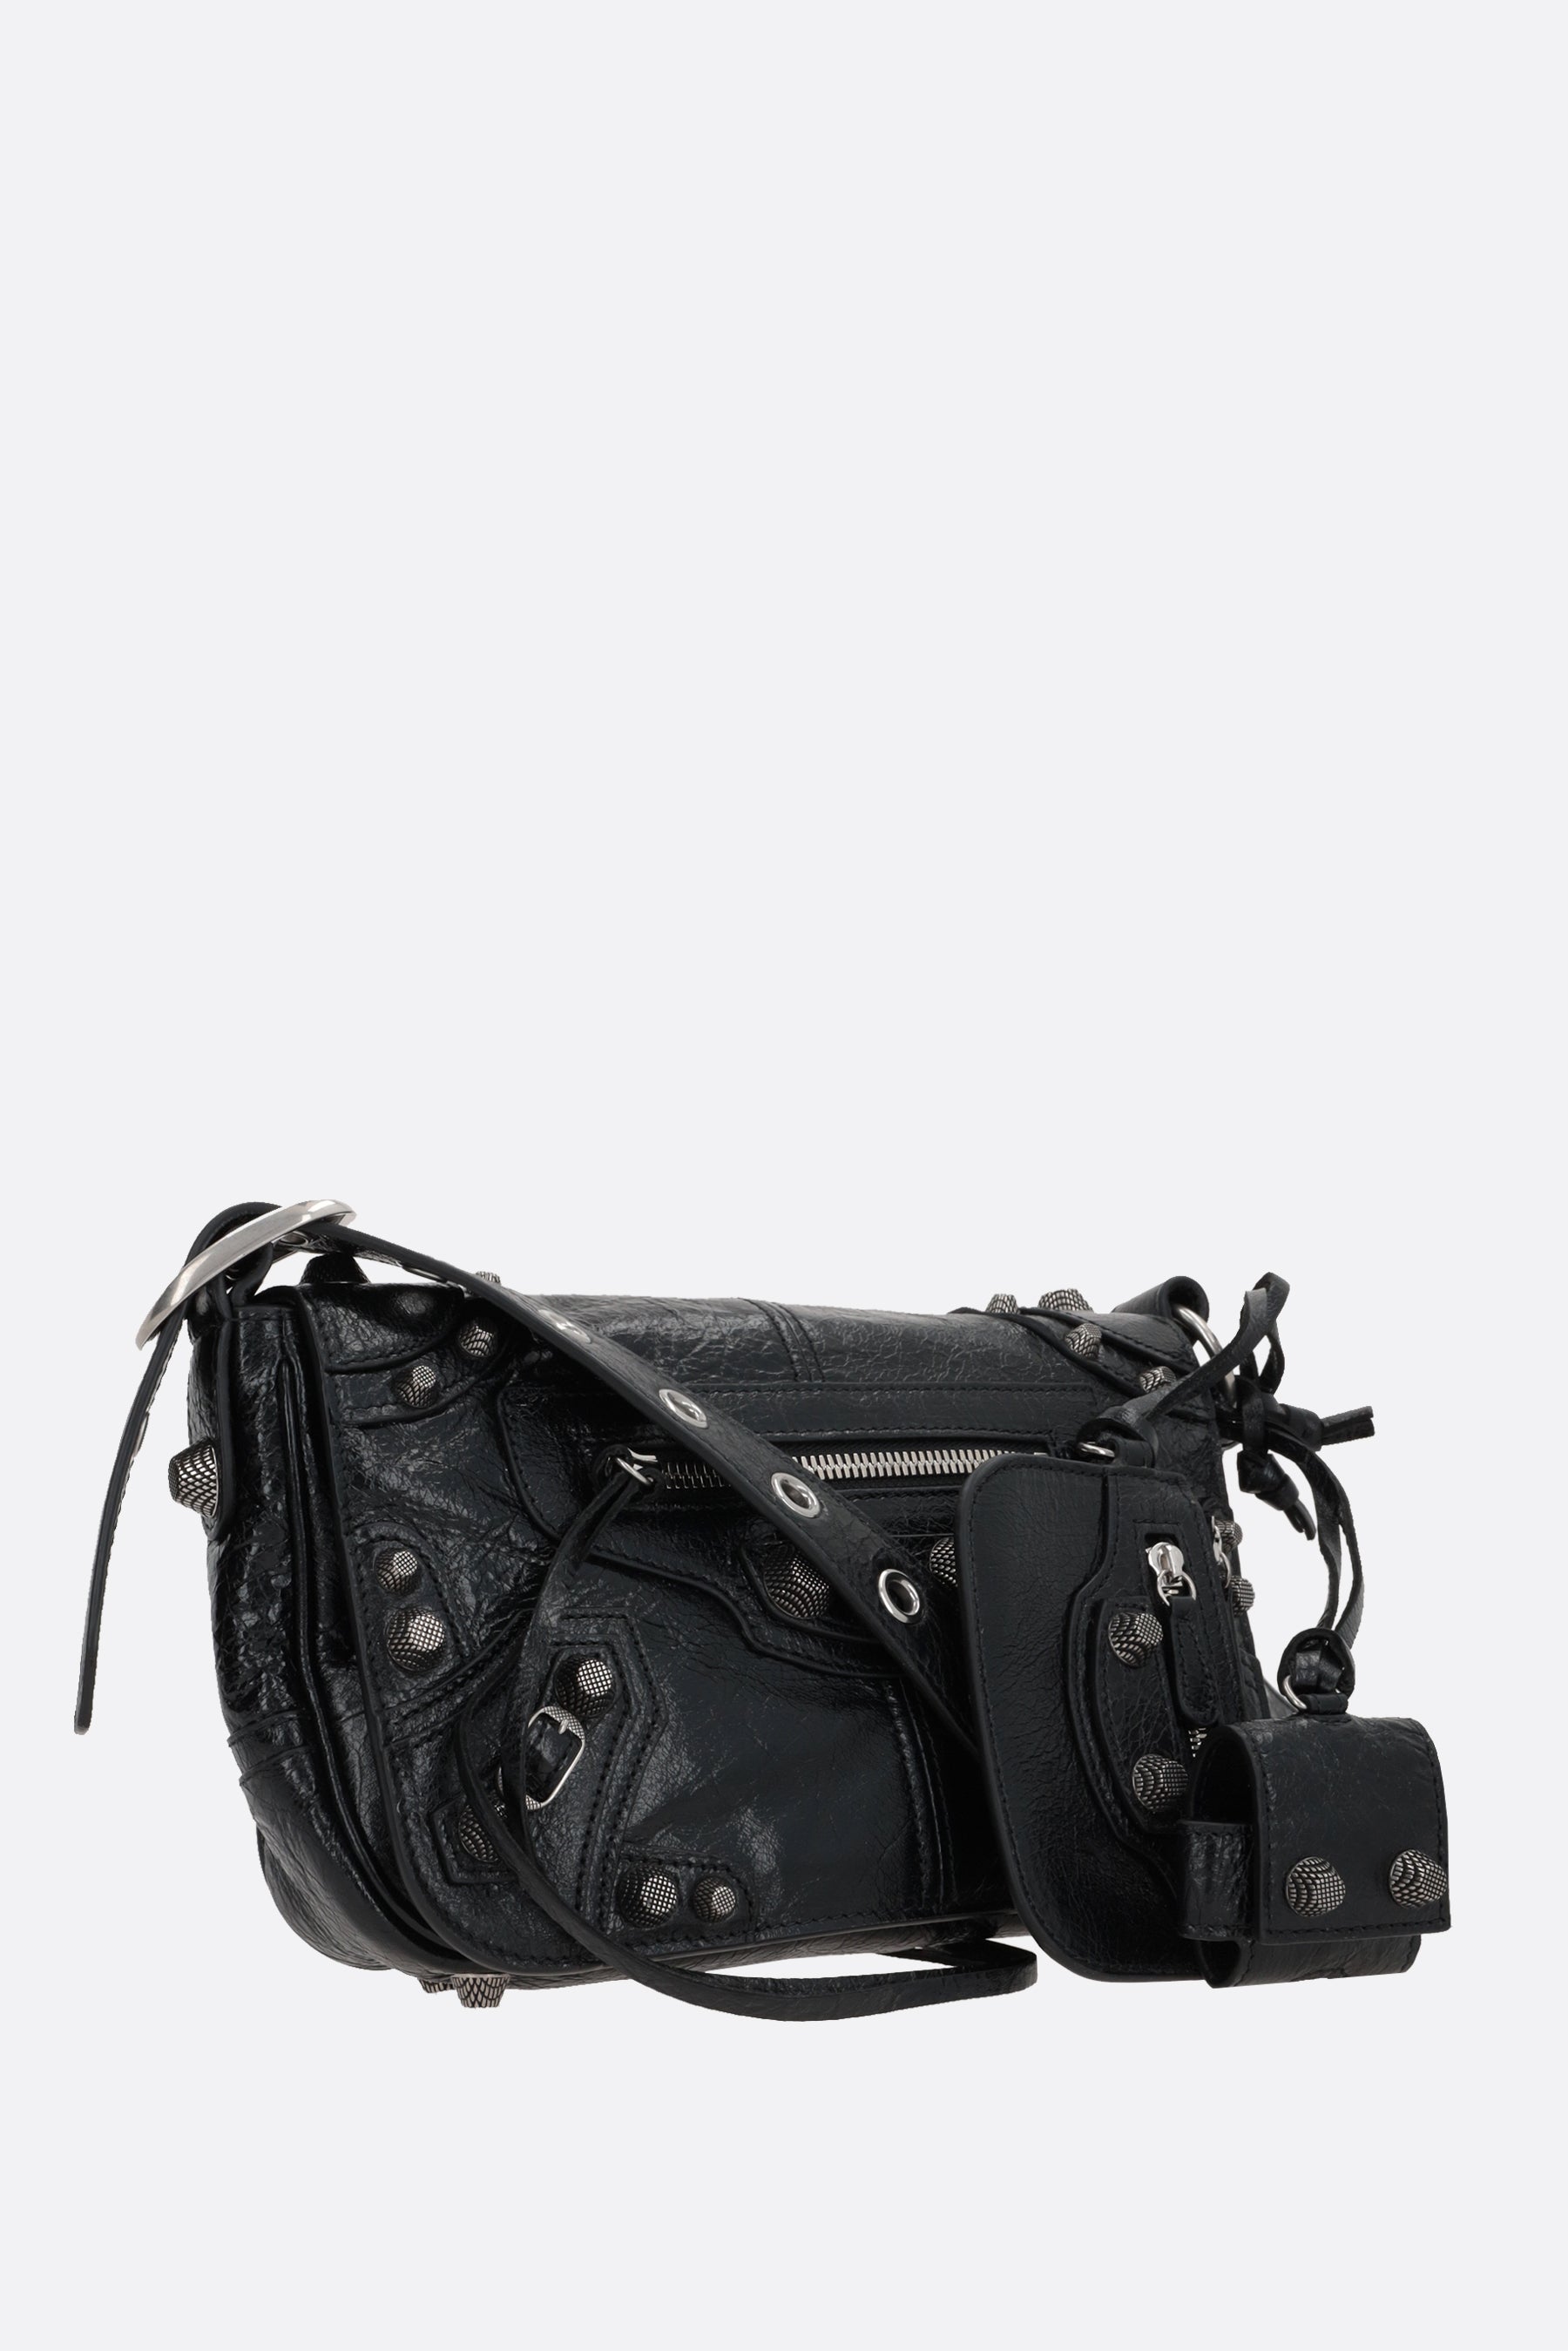 Balenciaga Crossbody Metallic 'Everyday' XS Bucket Bag W/Strap